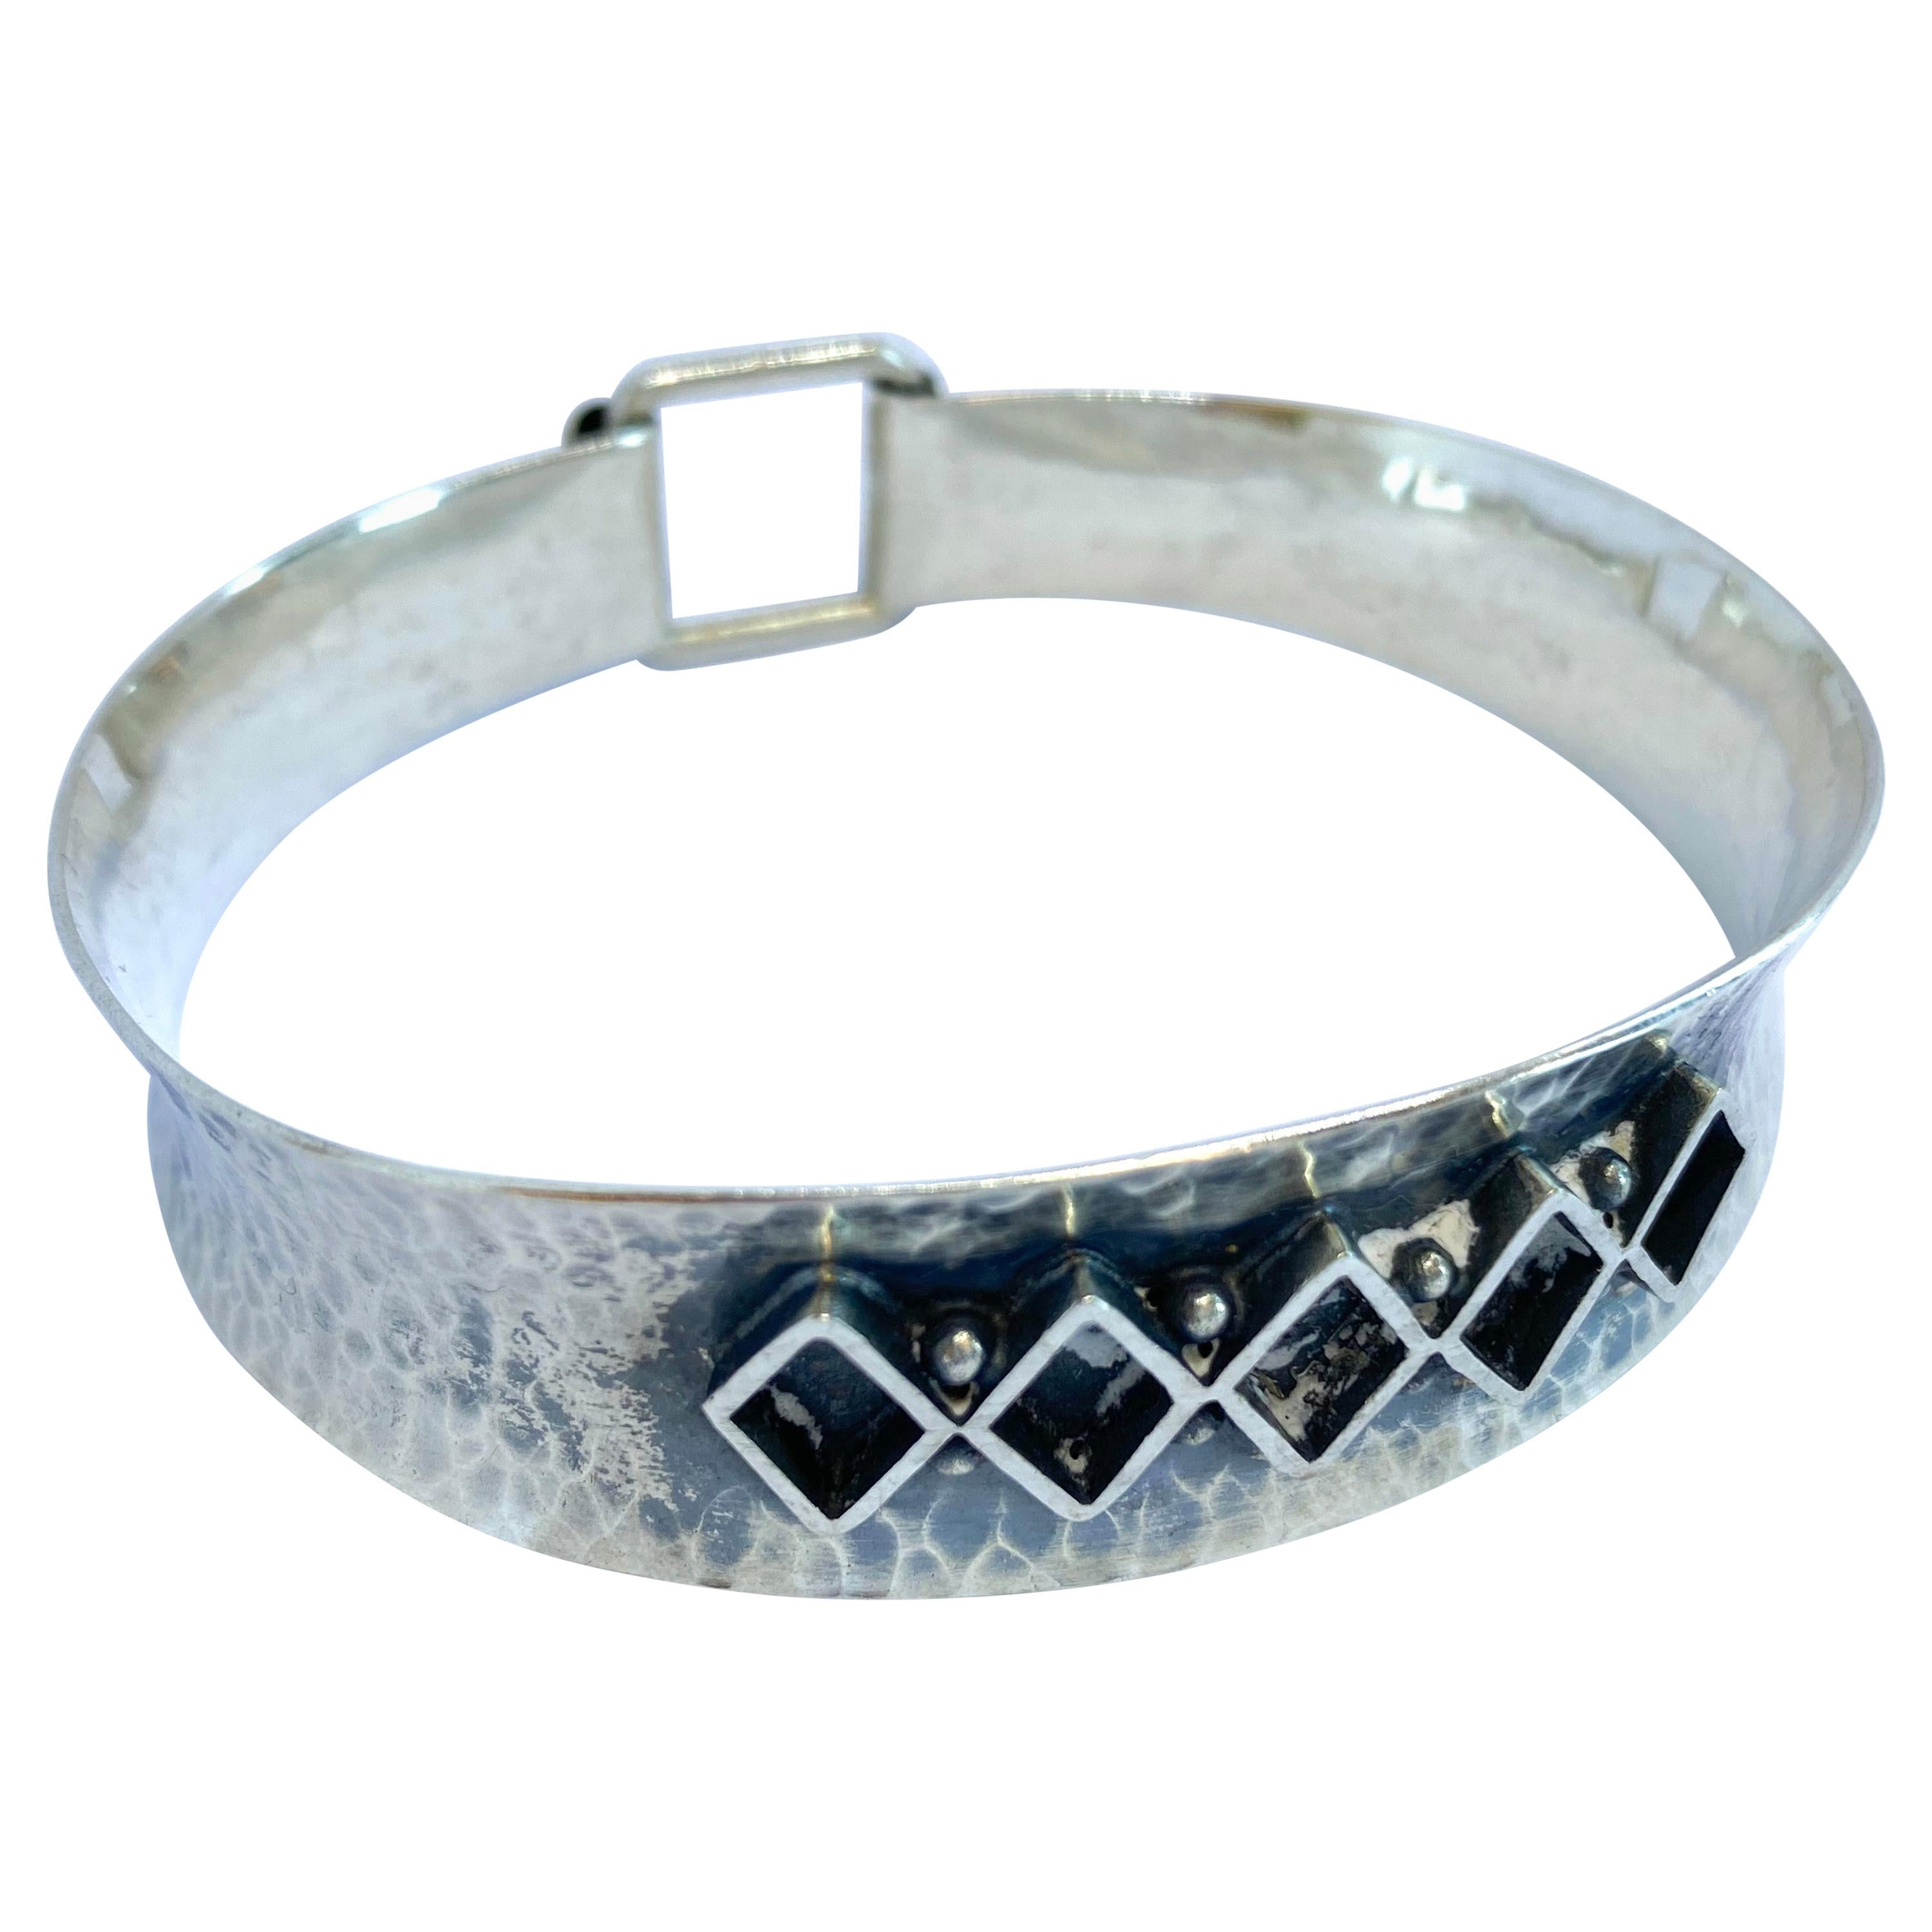 Bracelet Silver Made in Finland V. Hamara For Sale